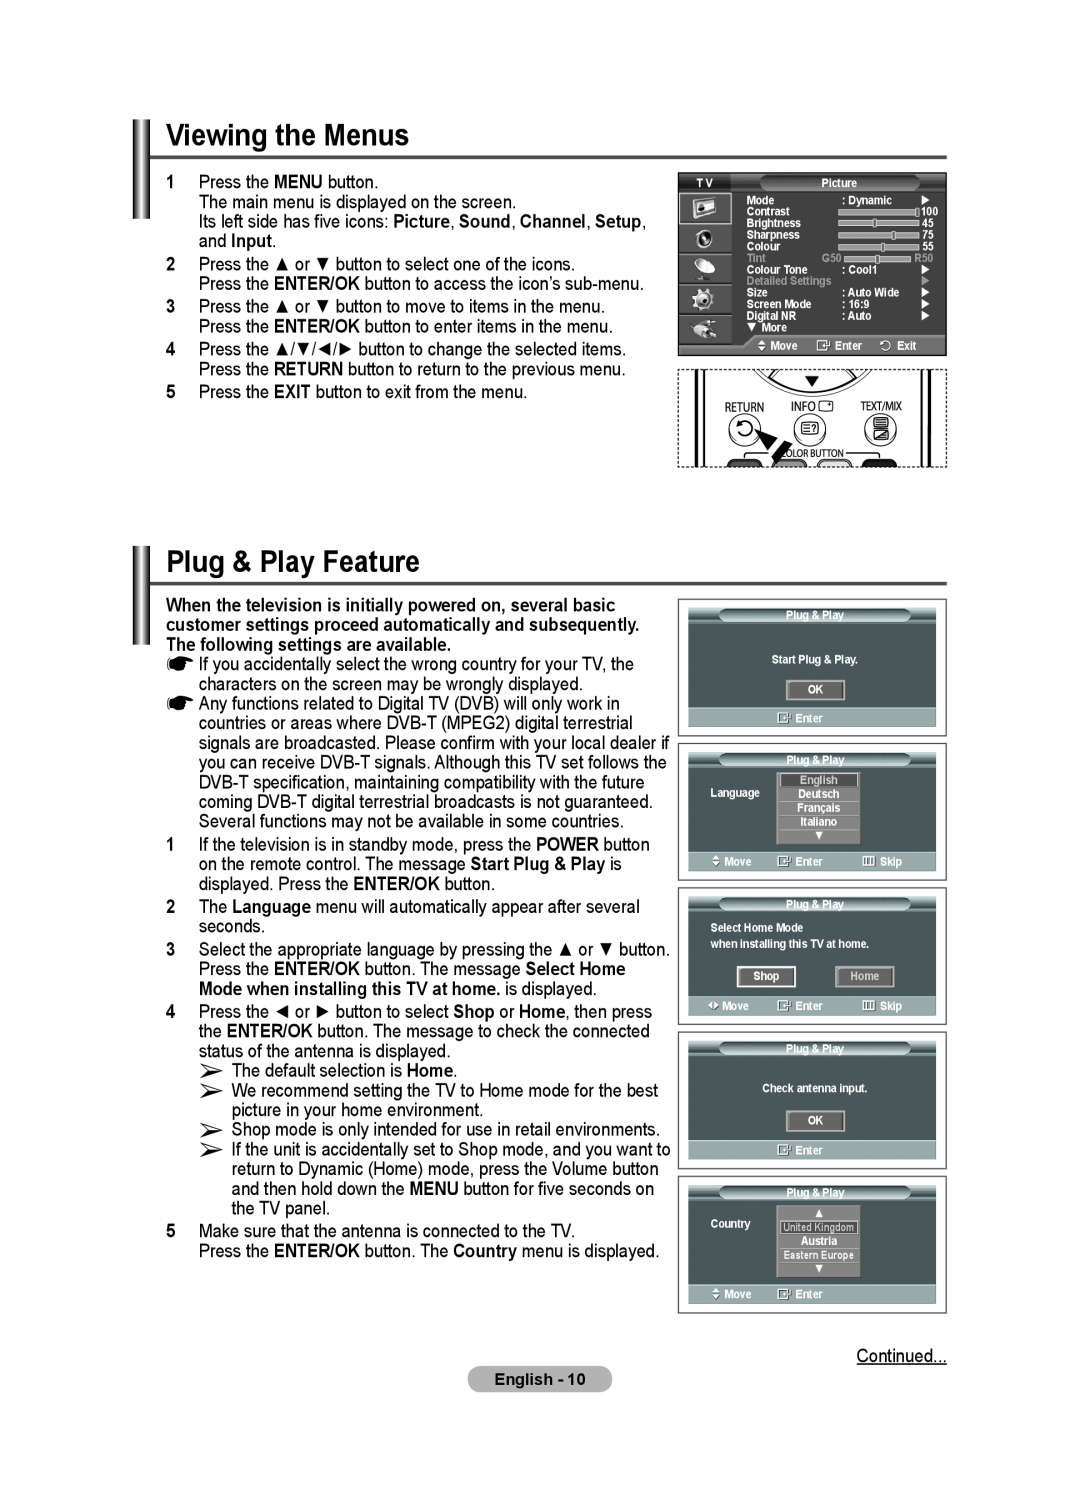 Samsung PS-42C77HD, PS-50C77HD, PS-50E97HD, PS-50C67HD, PS-42E97HD, PS-42C67HD manual Viewing the Menus, Plug & Play Feature 